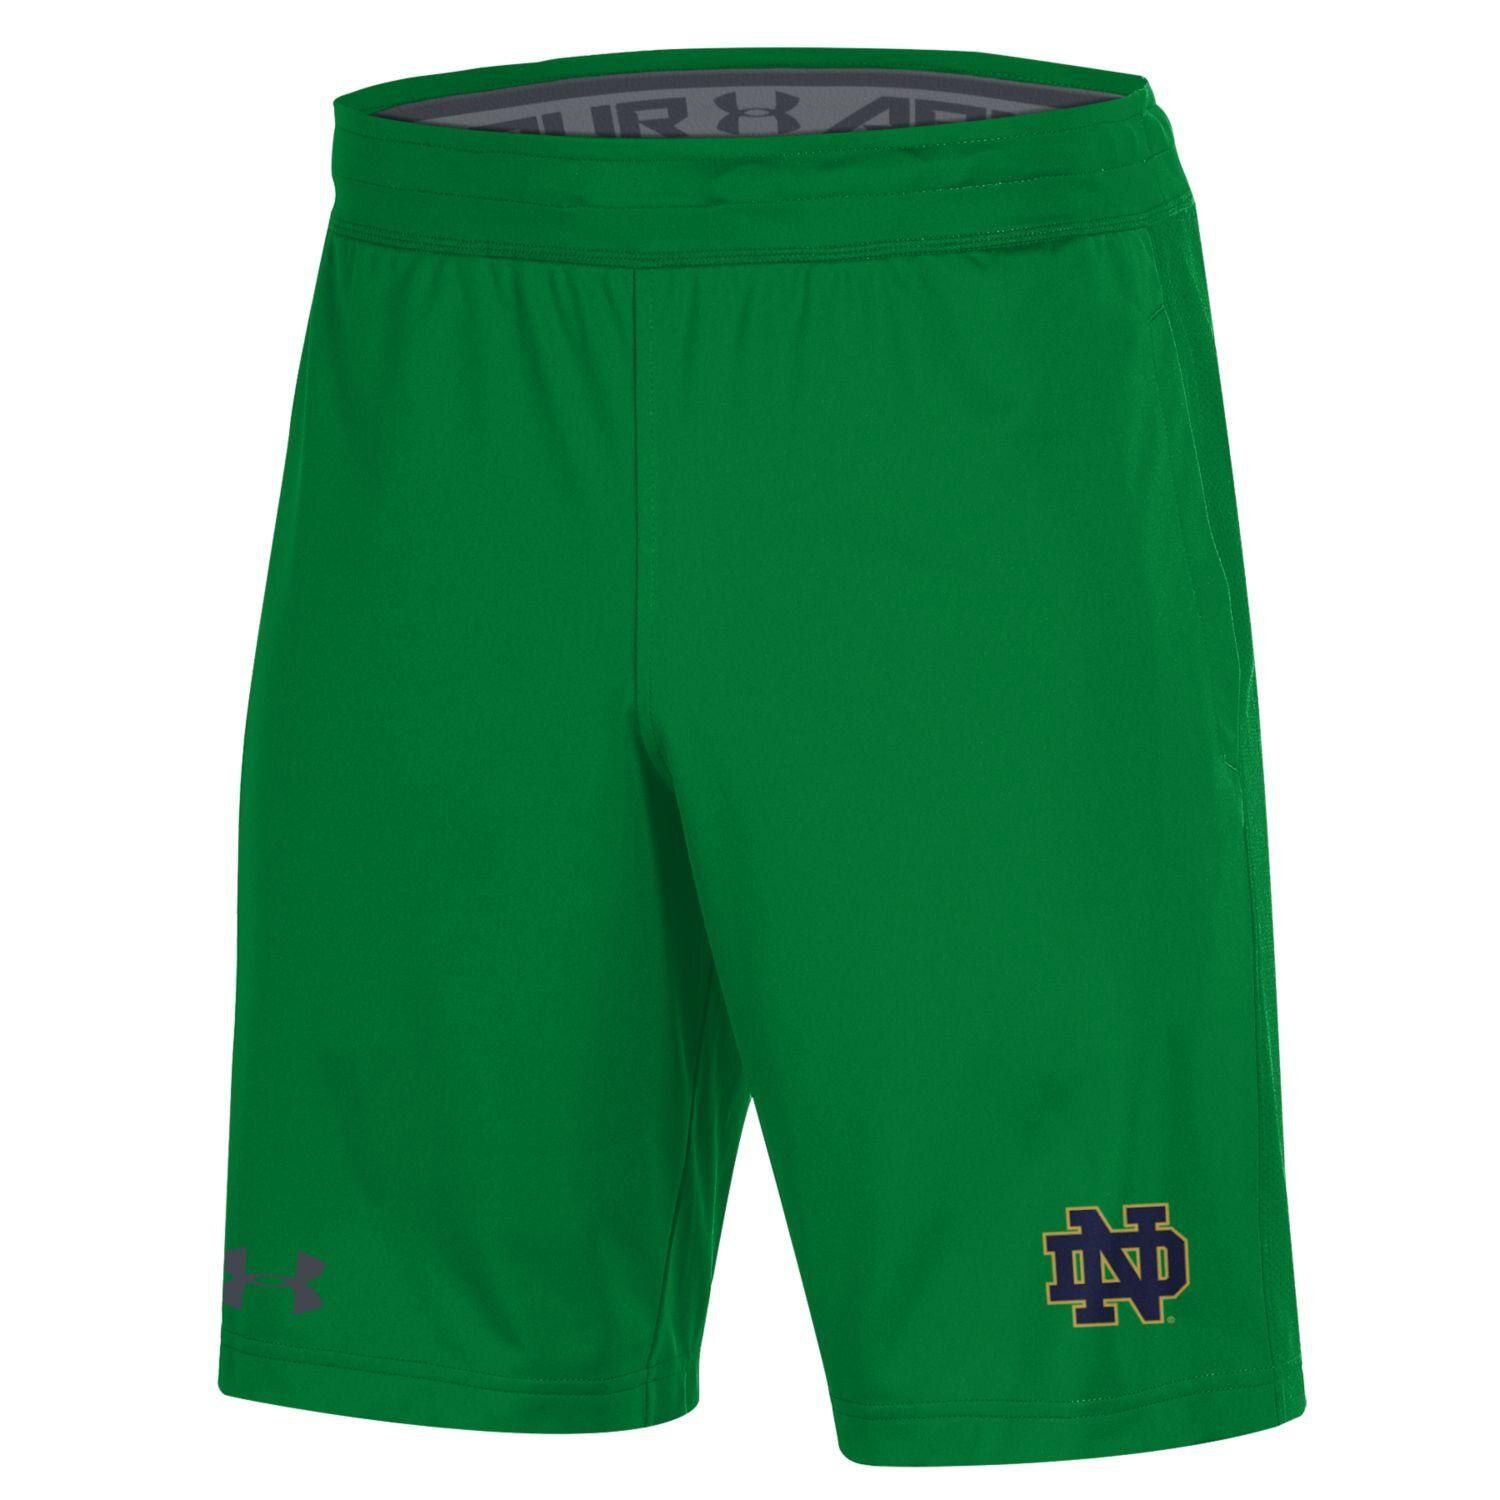 green under shorts